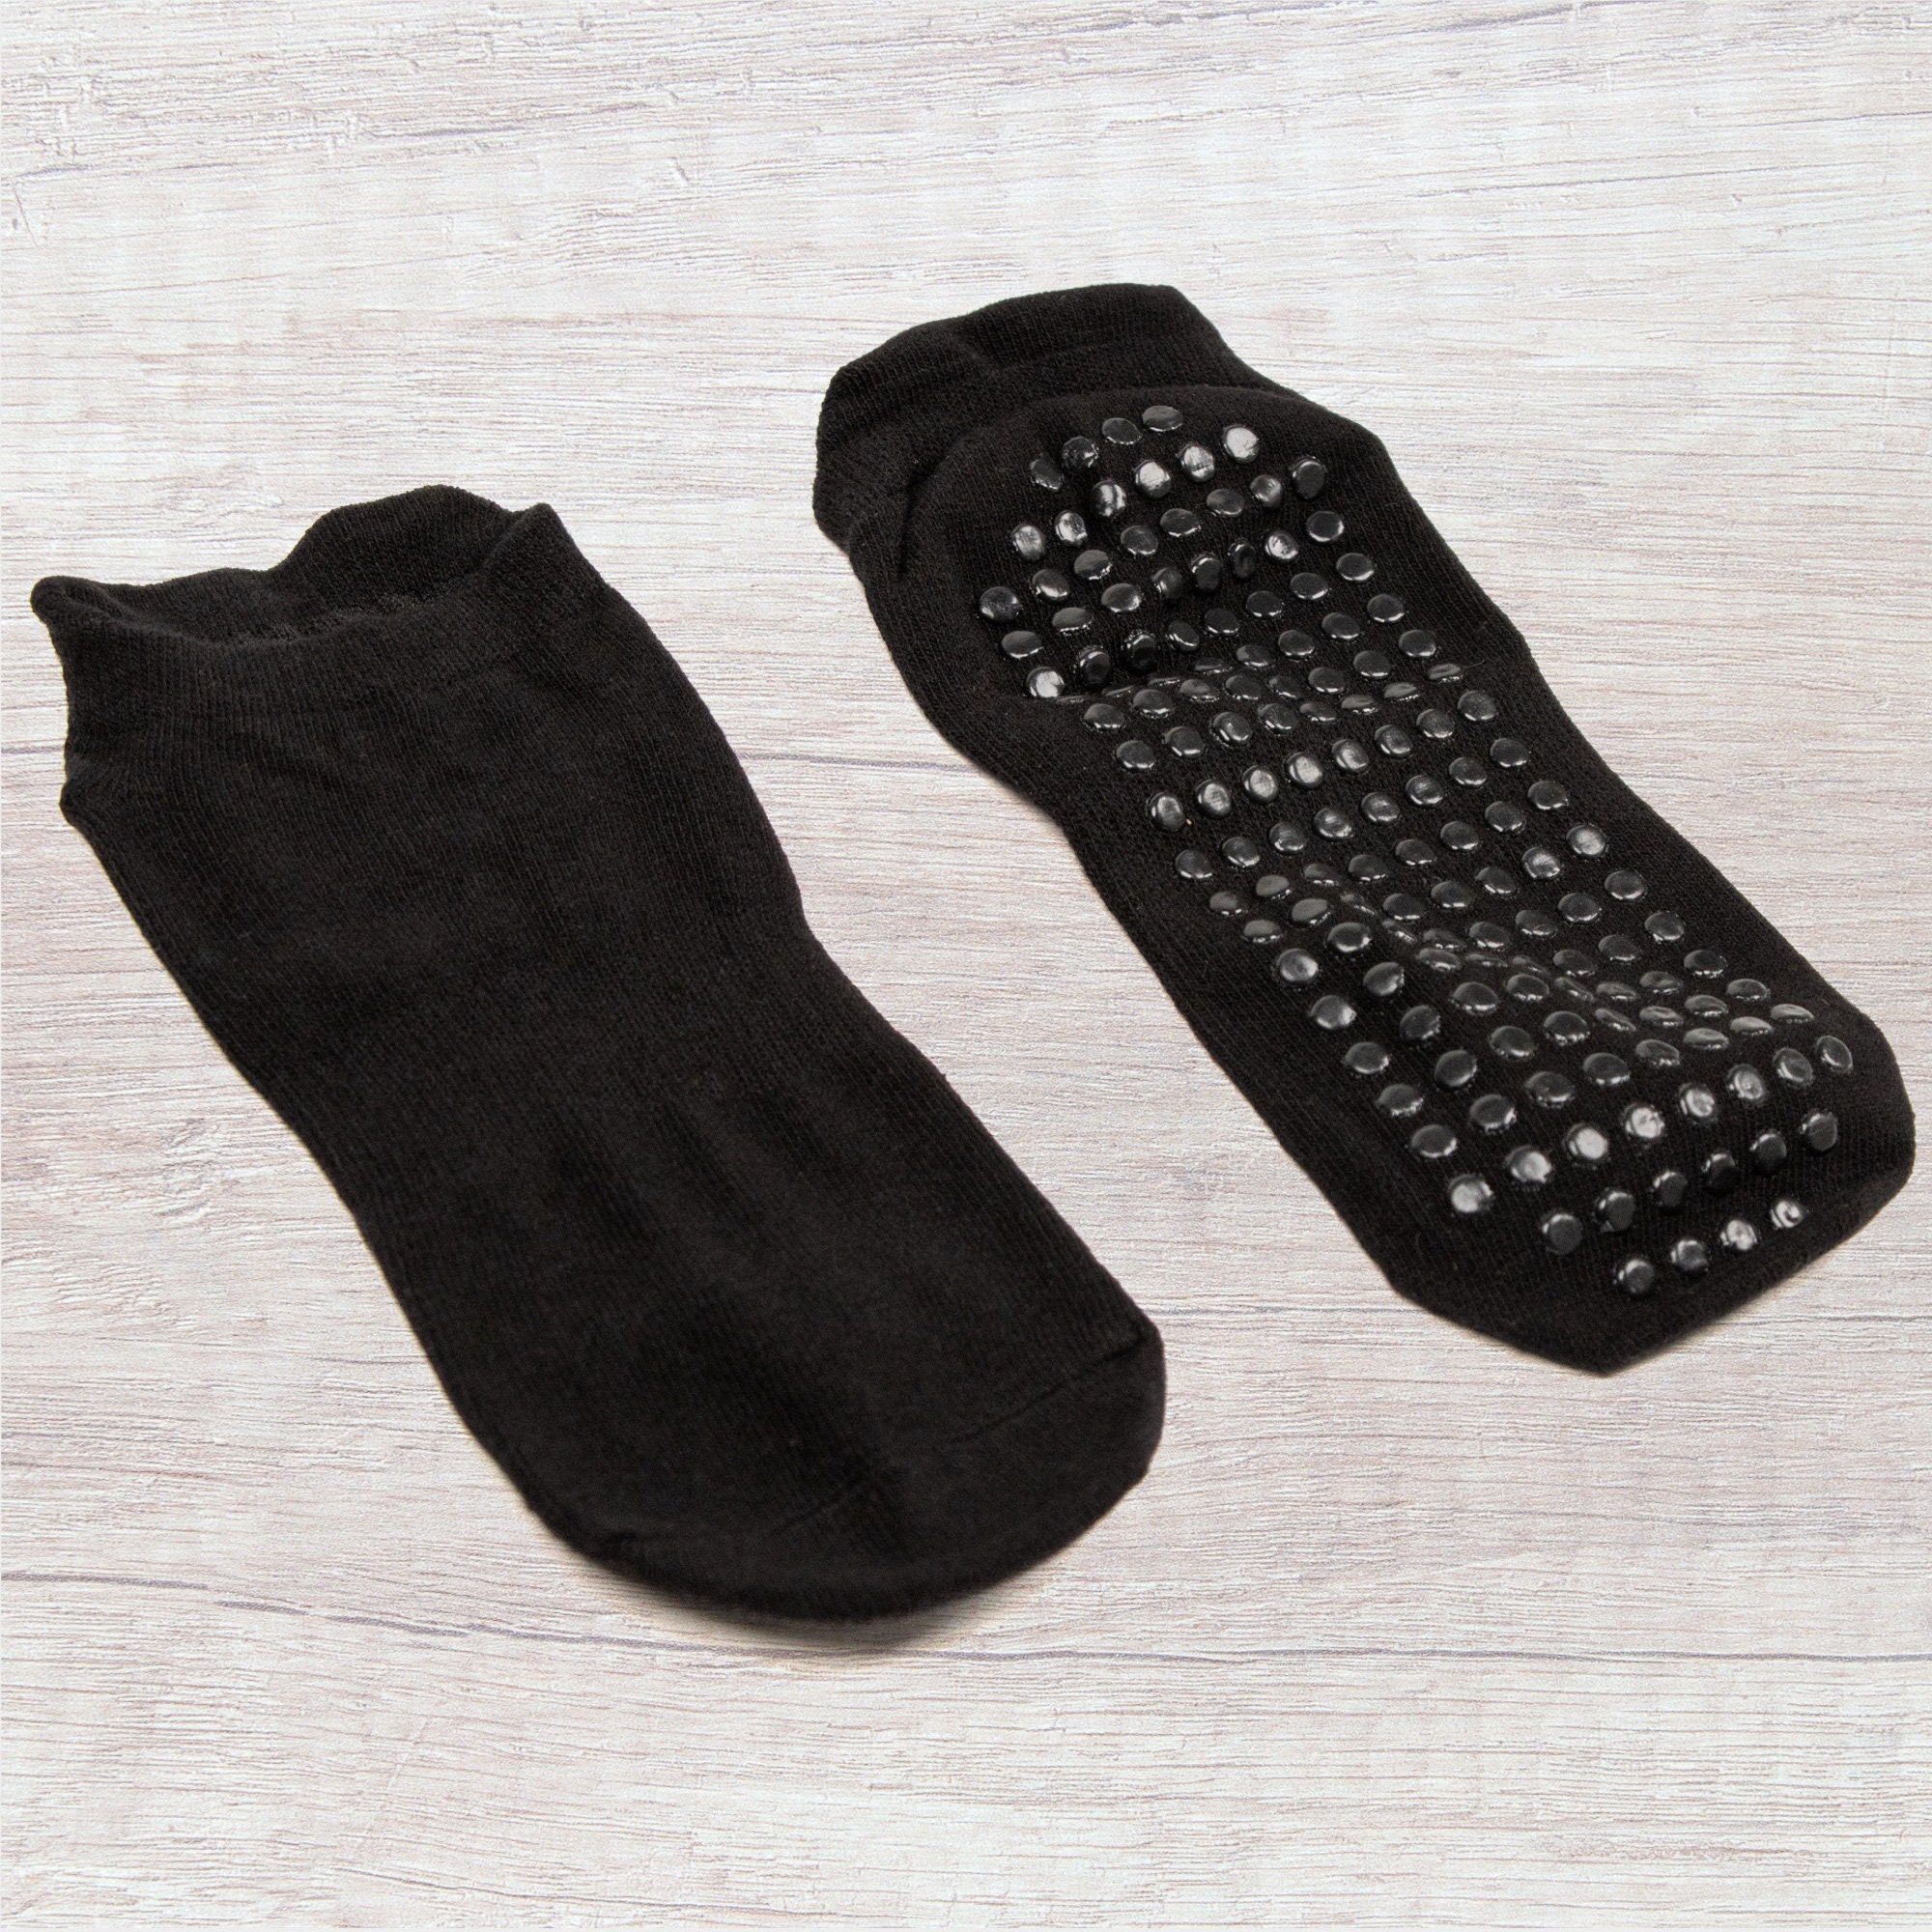 Myga Yoga Socks 3 Pairs of Non Slip Grip Socks for Yoga, Pilates